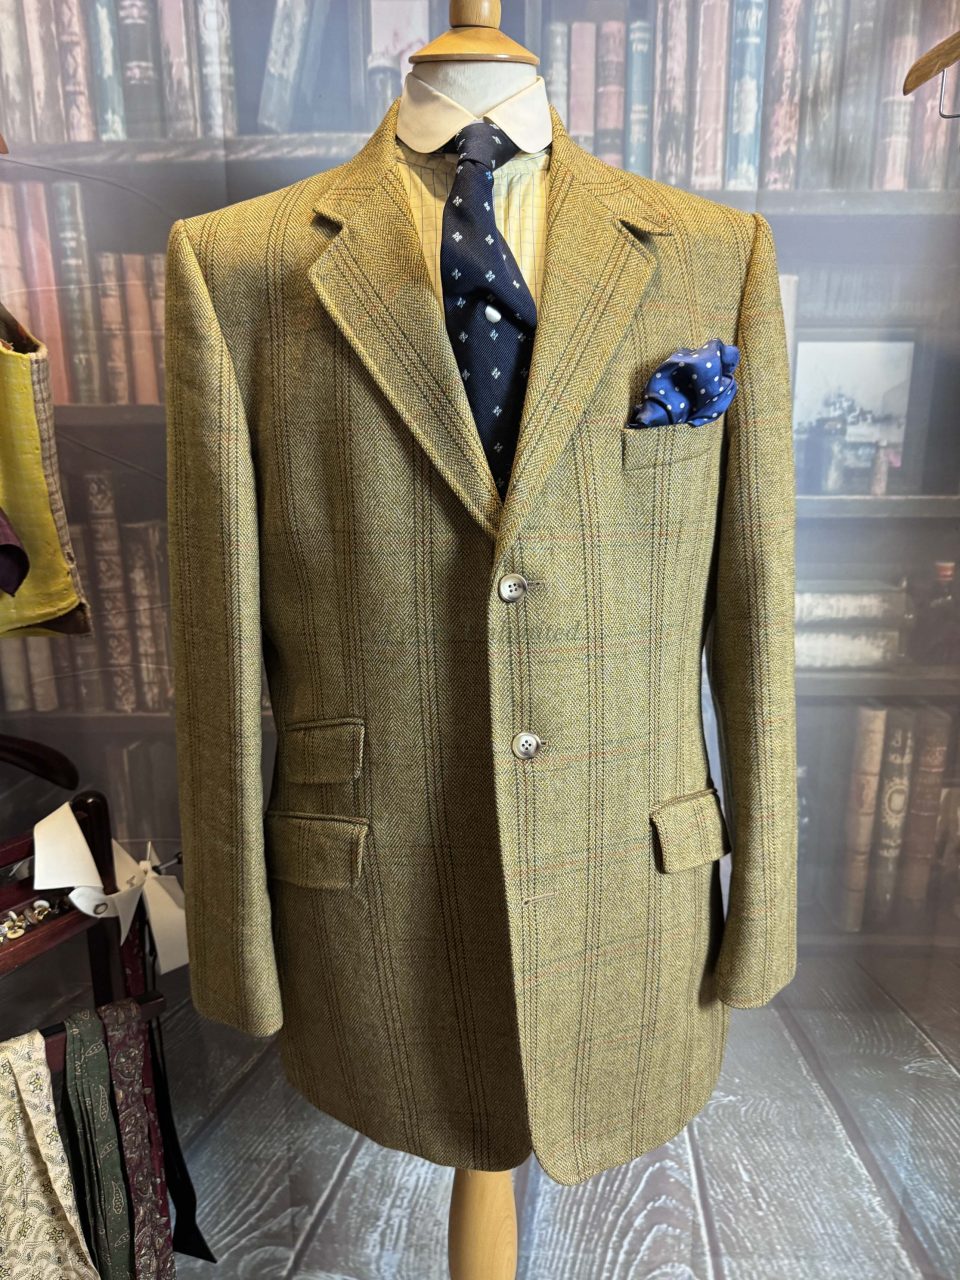 Wonderful Alexandre Savile Row Tweed Jacket 42″/107cm Chest. (Ref:ALT42)